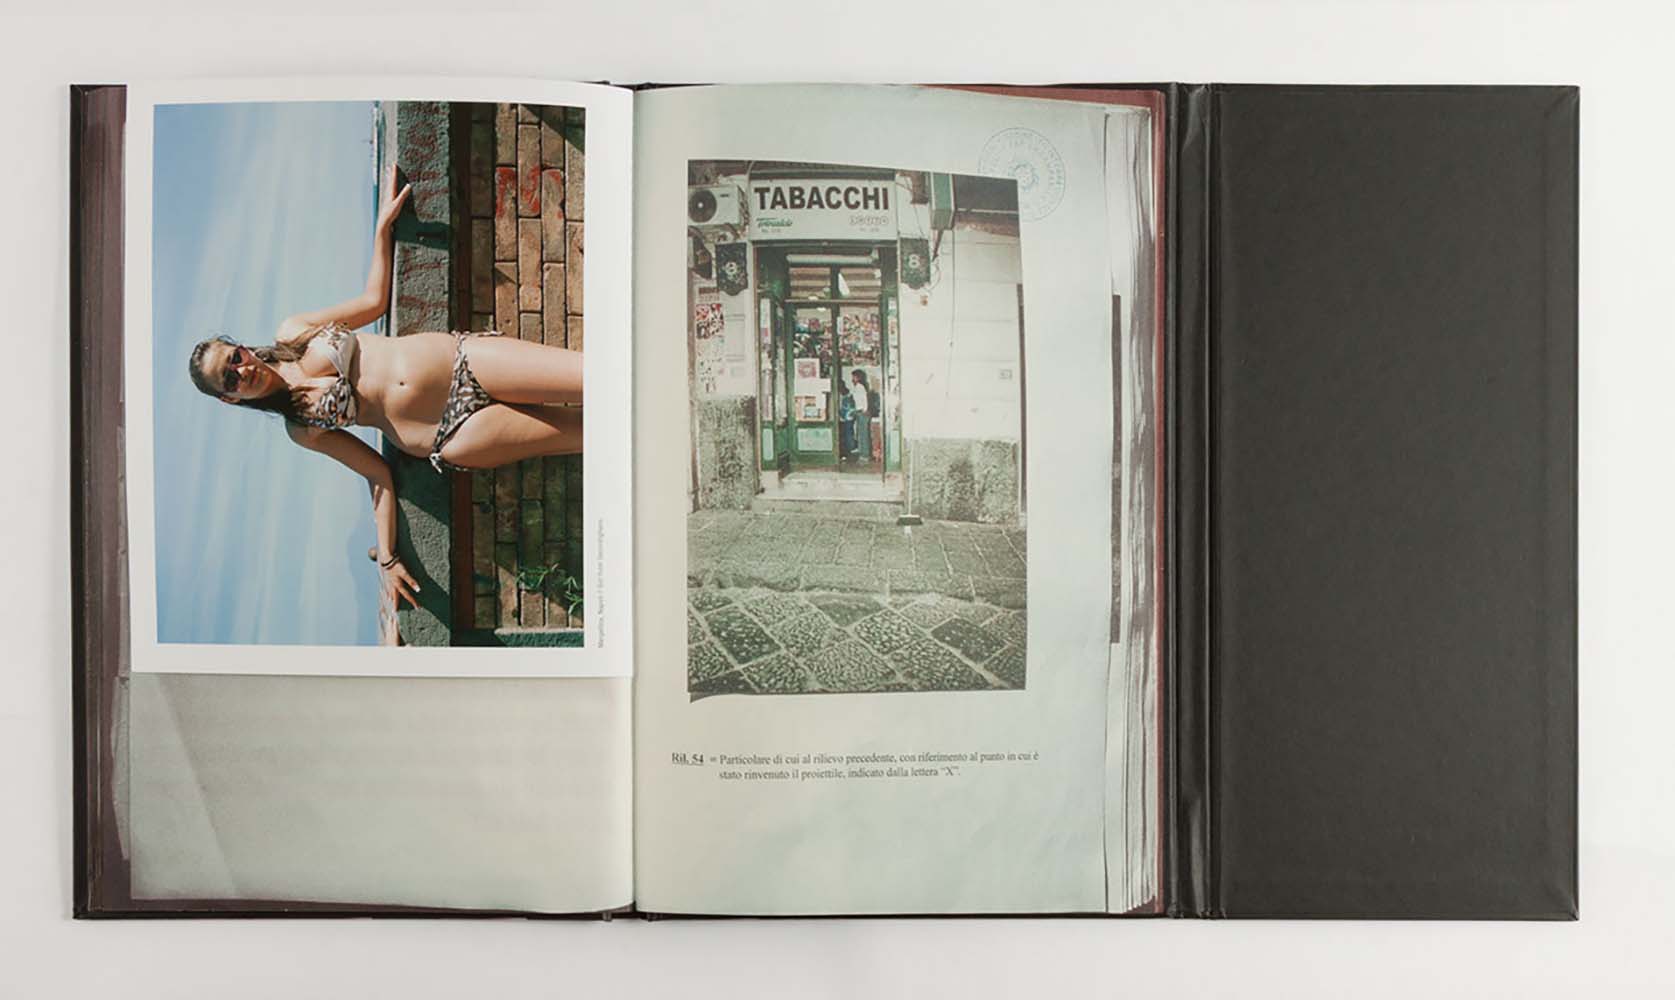 Gomorrah Girl - The Book by Valerio Spada